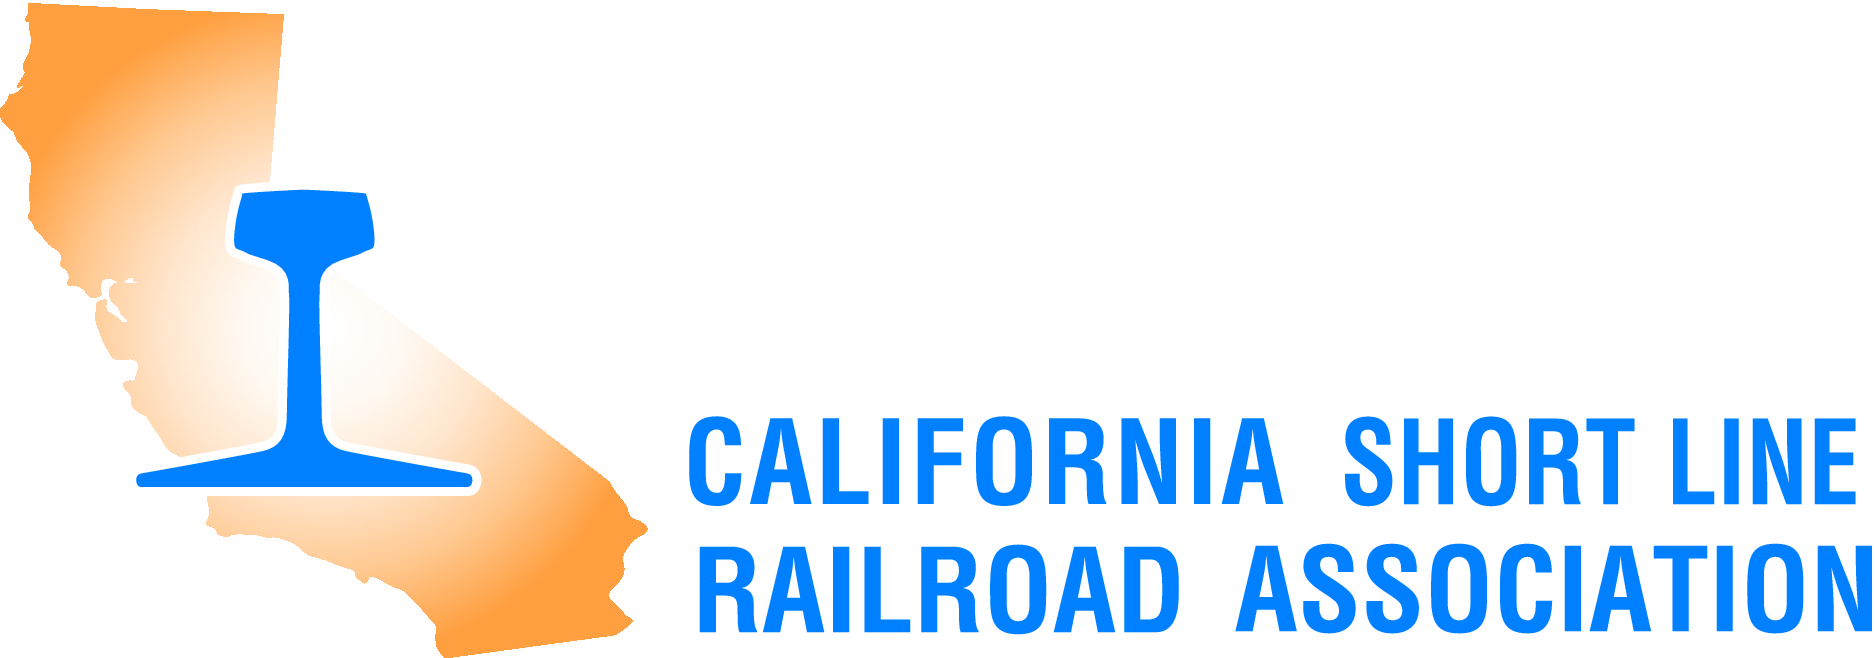 California Short Line Railroad Assocation logo